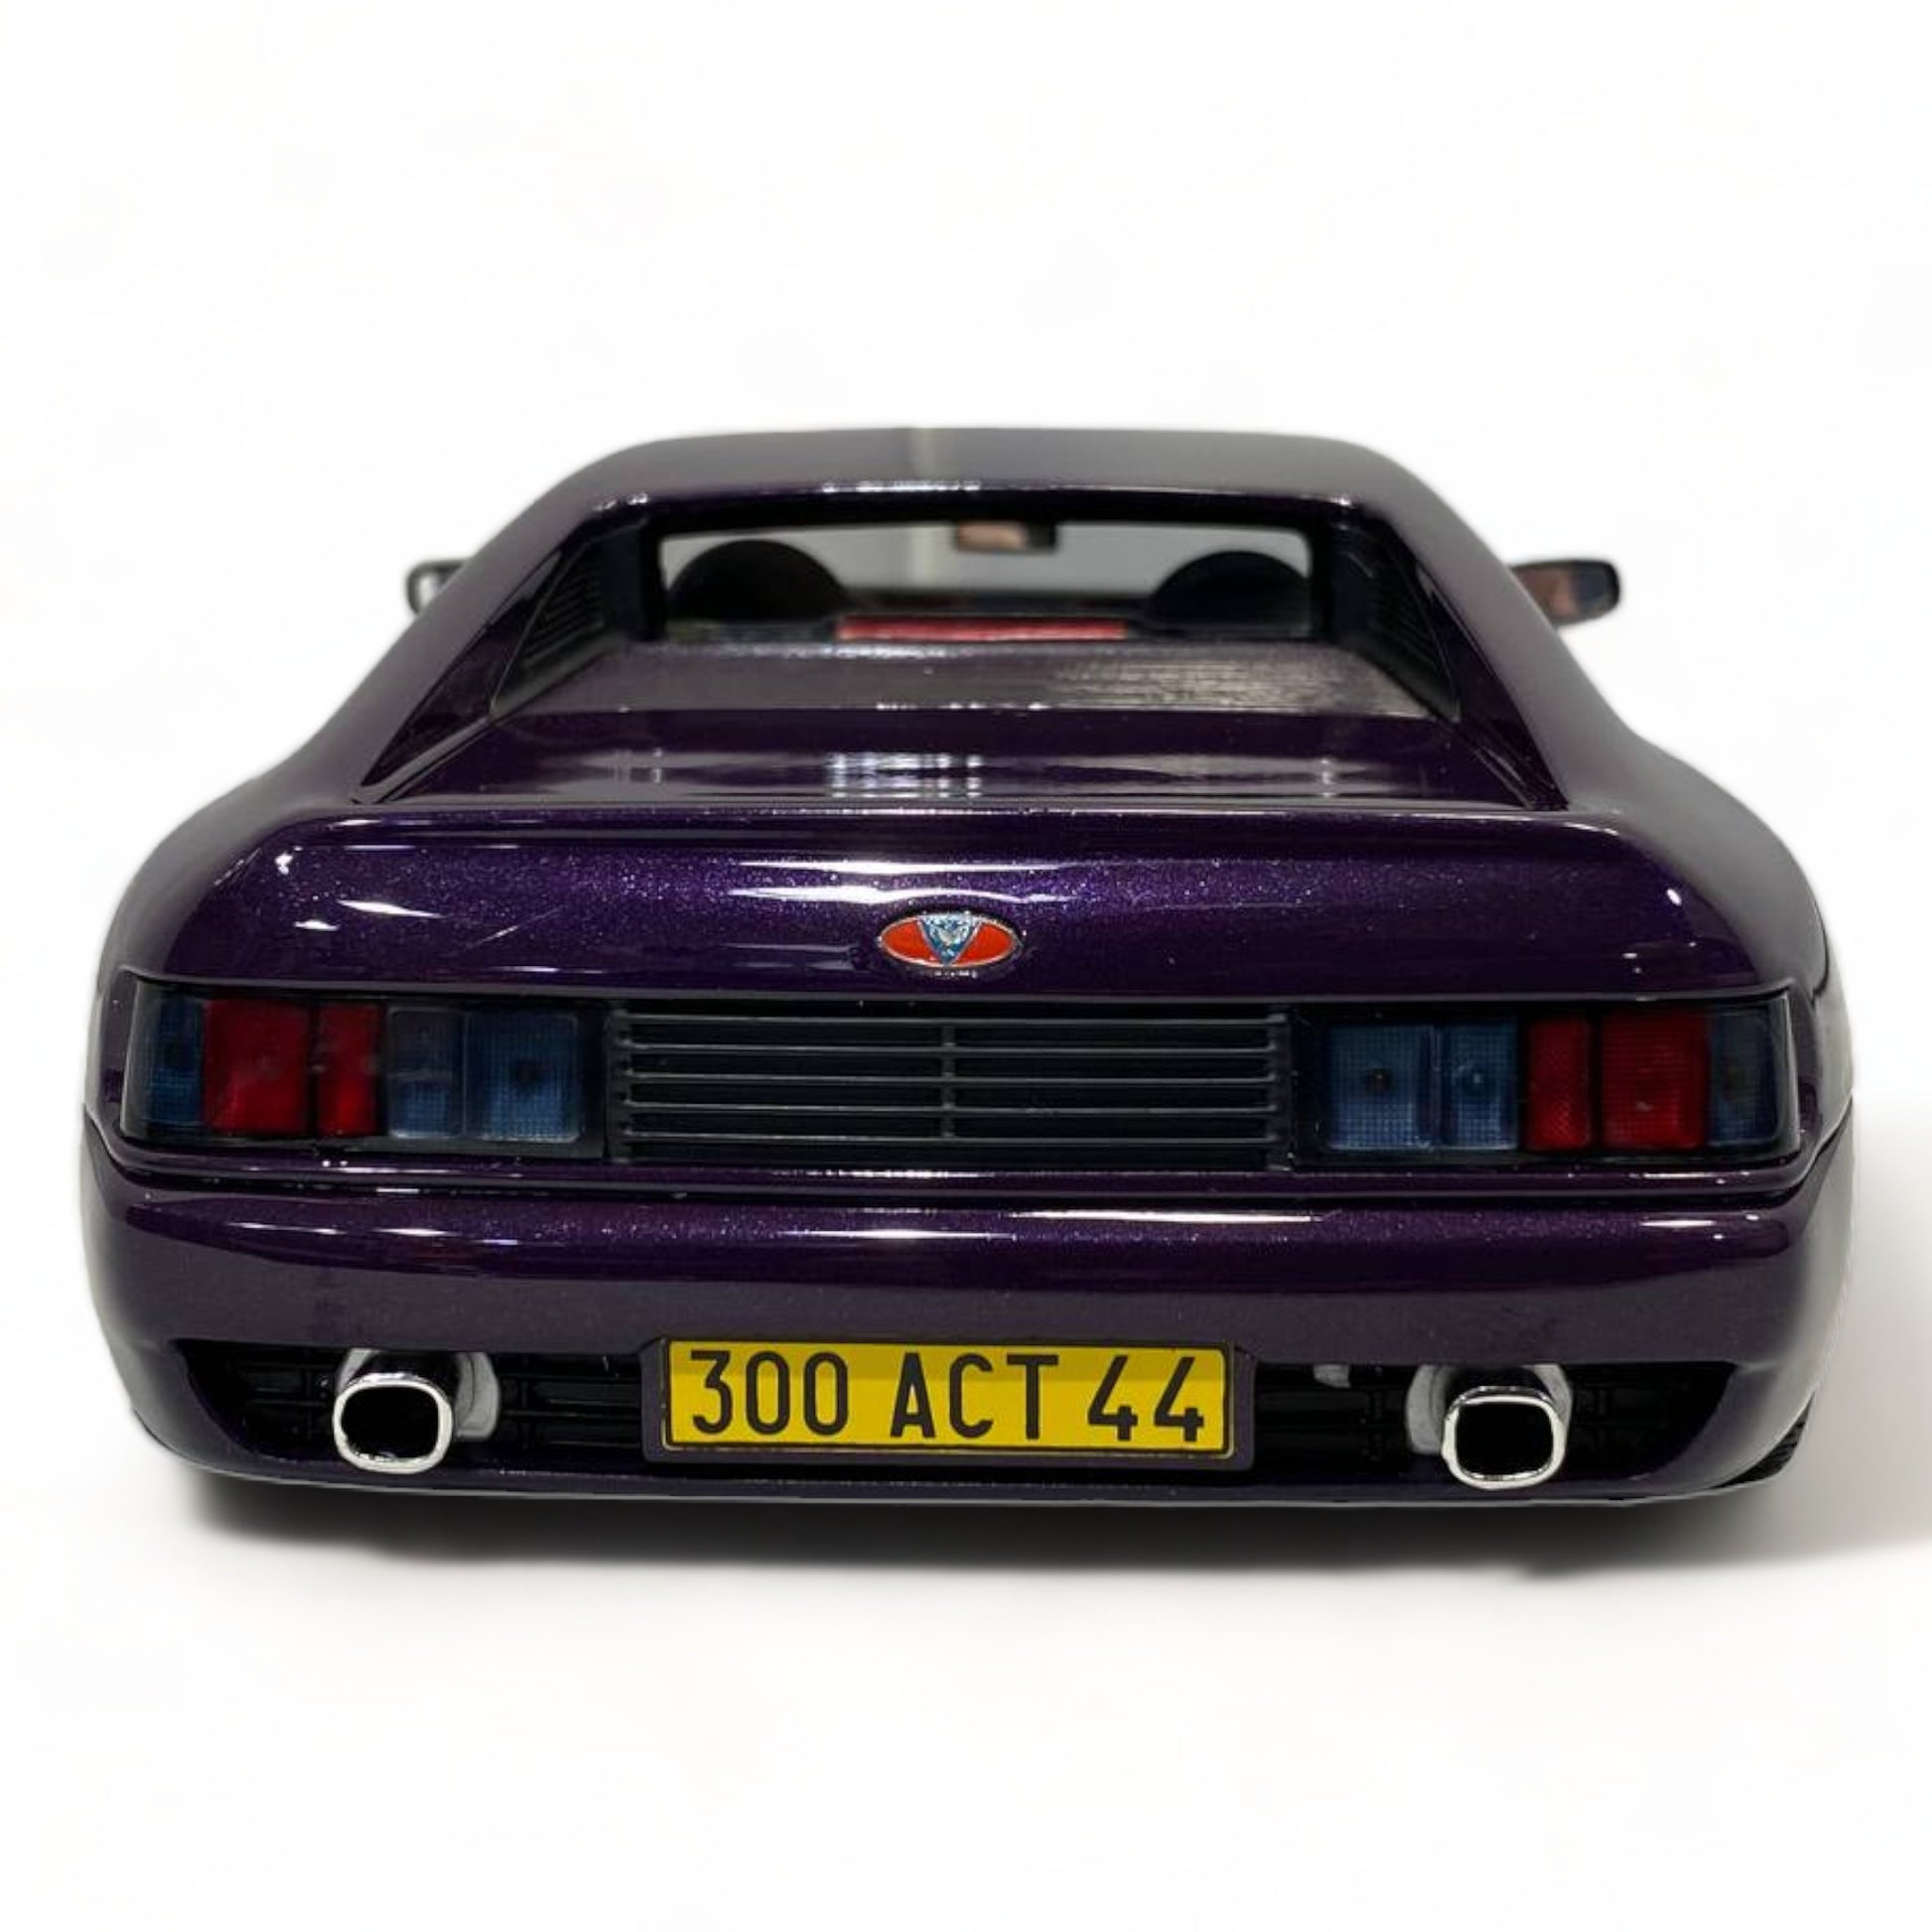 1/18 Diecast OTTO VENTURI 300 ATLANTIQUE Purple Miniature Car|Sold in Dturman.com Dubai UAE.